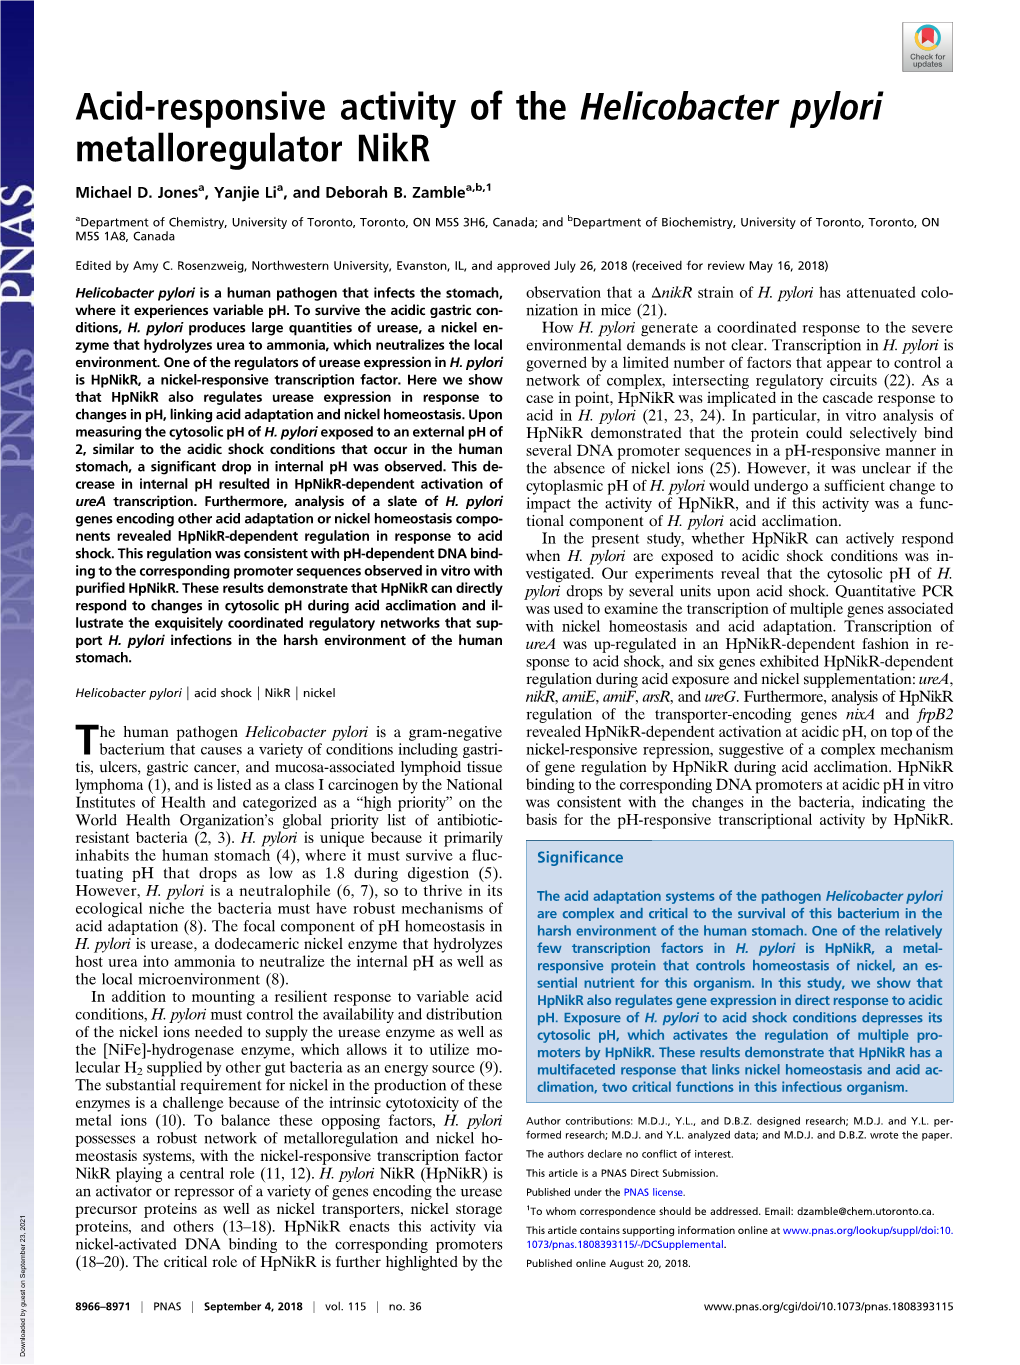 Acid-Responsive Activity of the Helicobacter Pylori Metalloregulator Nikr